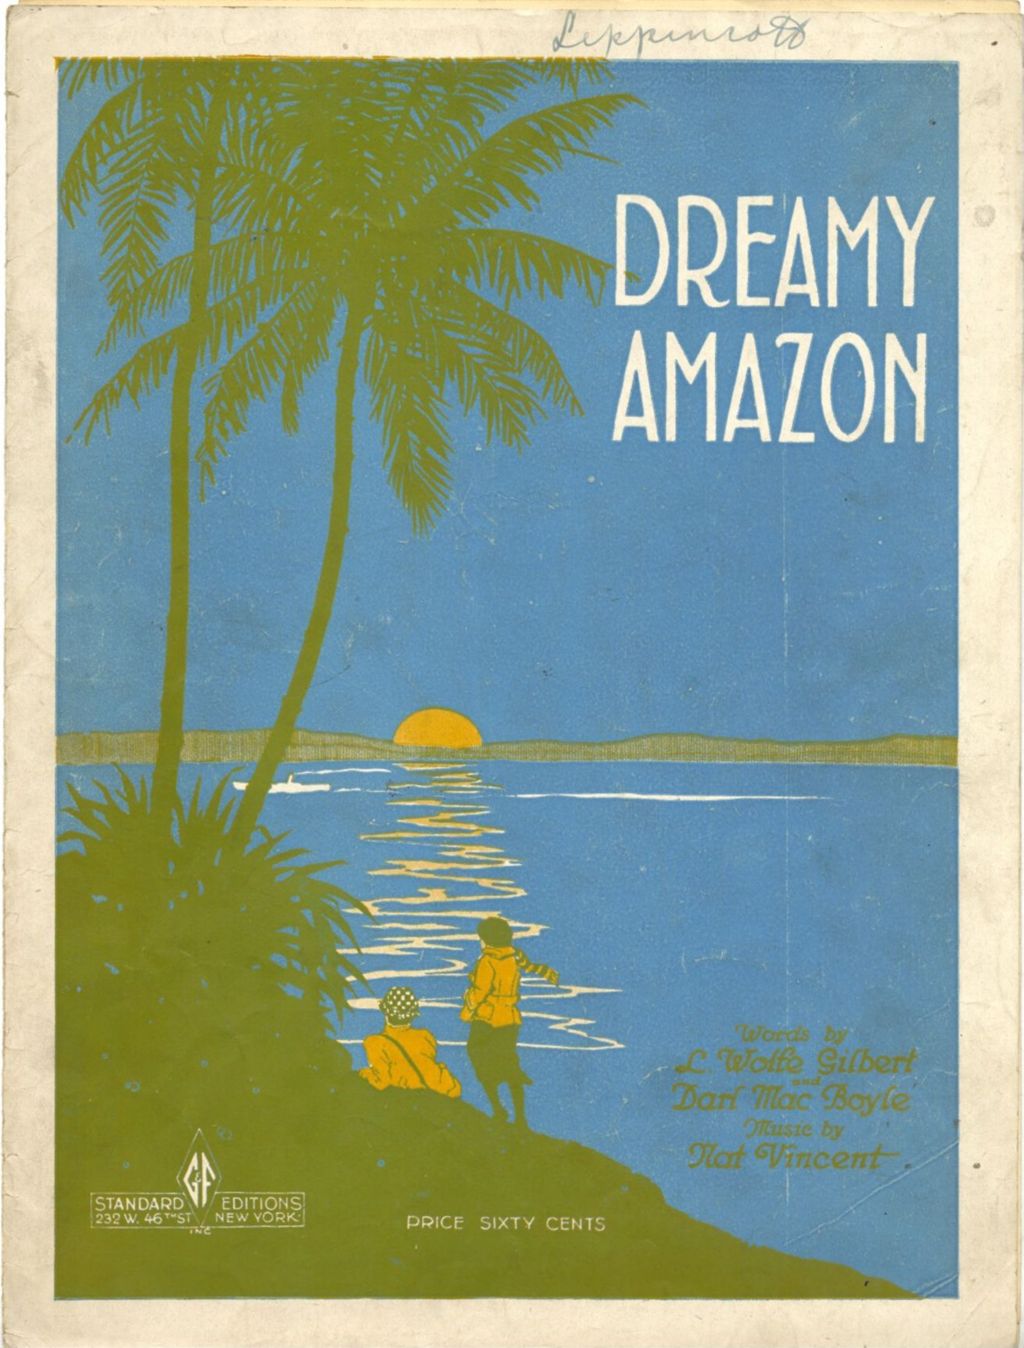 Dreamy Amazon